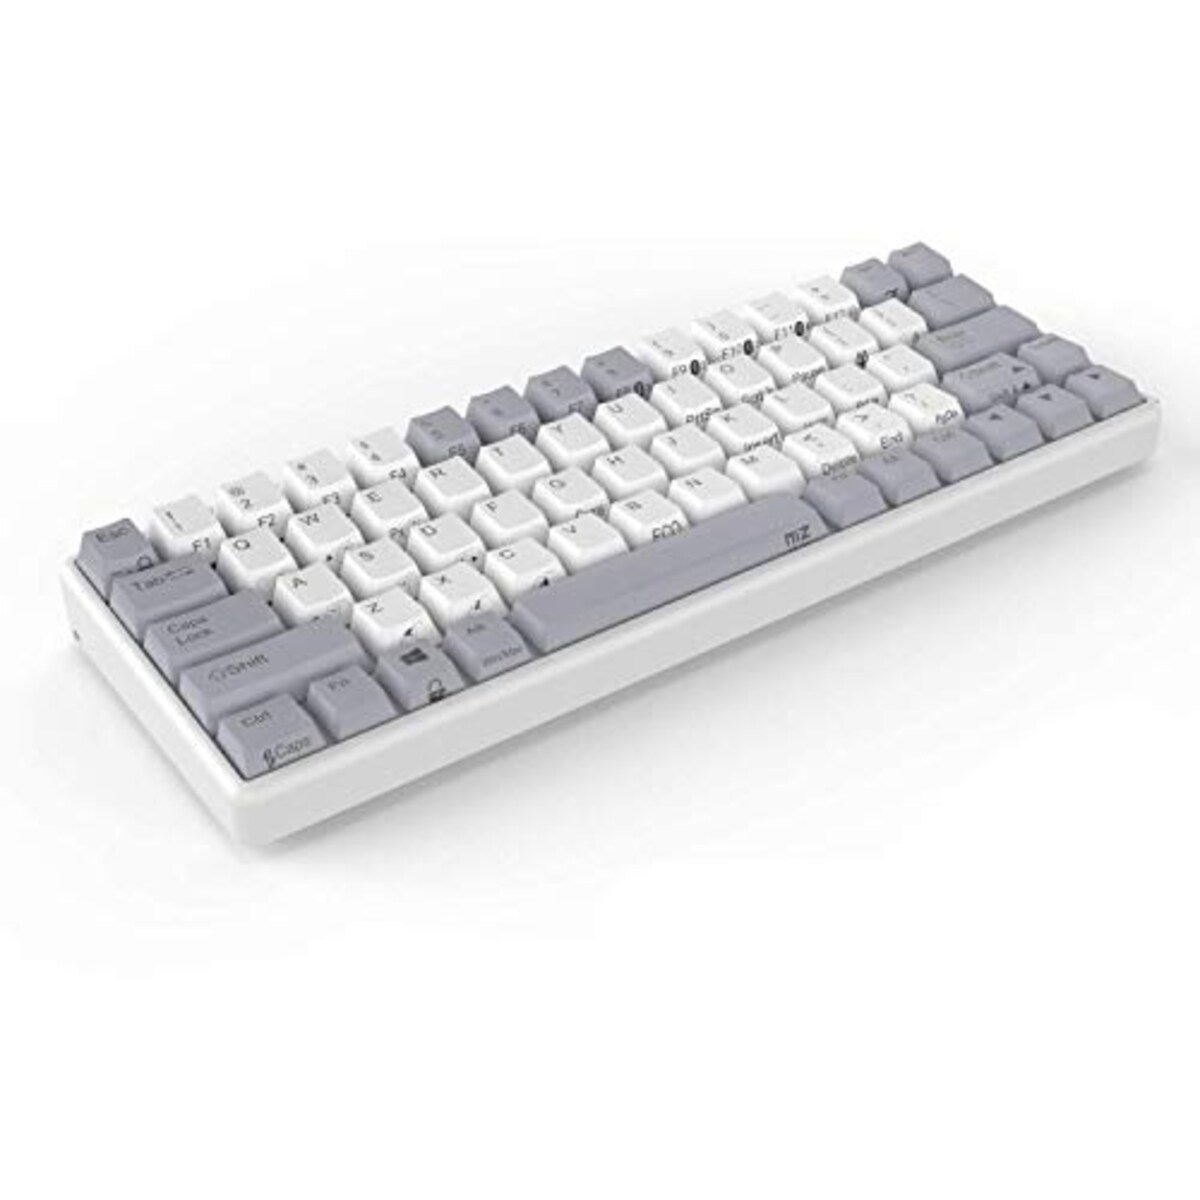 NiZ Keyboard Atom66 White EC−Bluetooth 35g